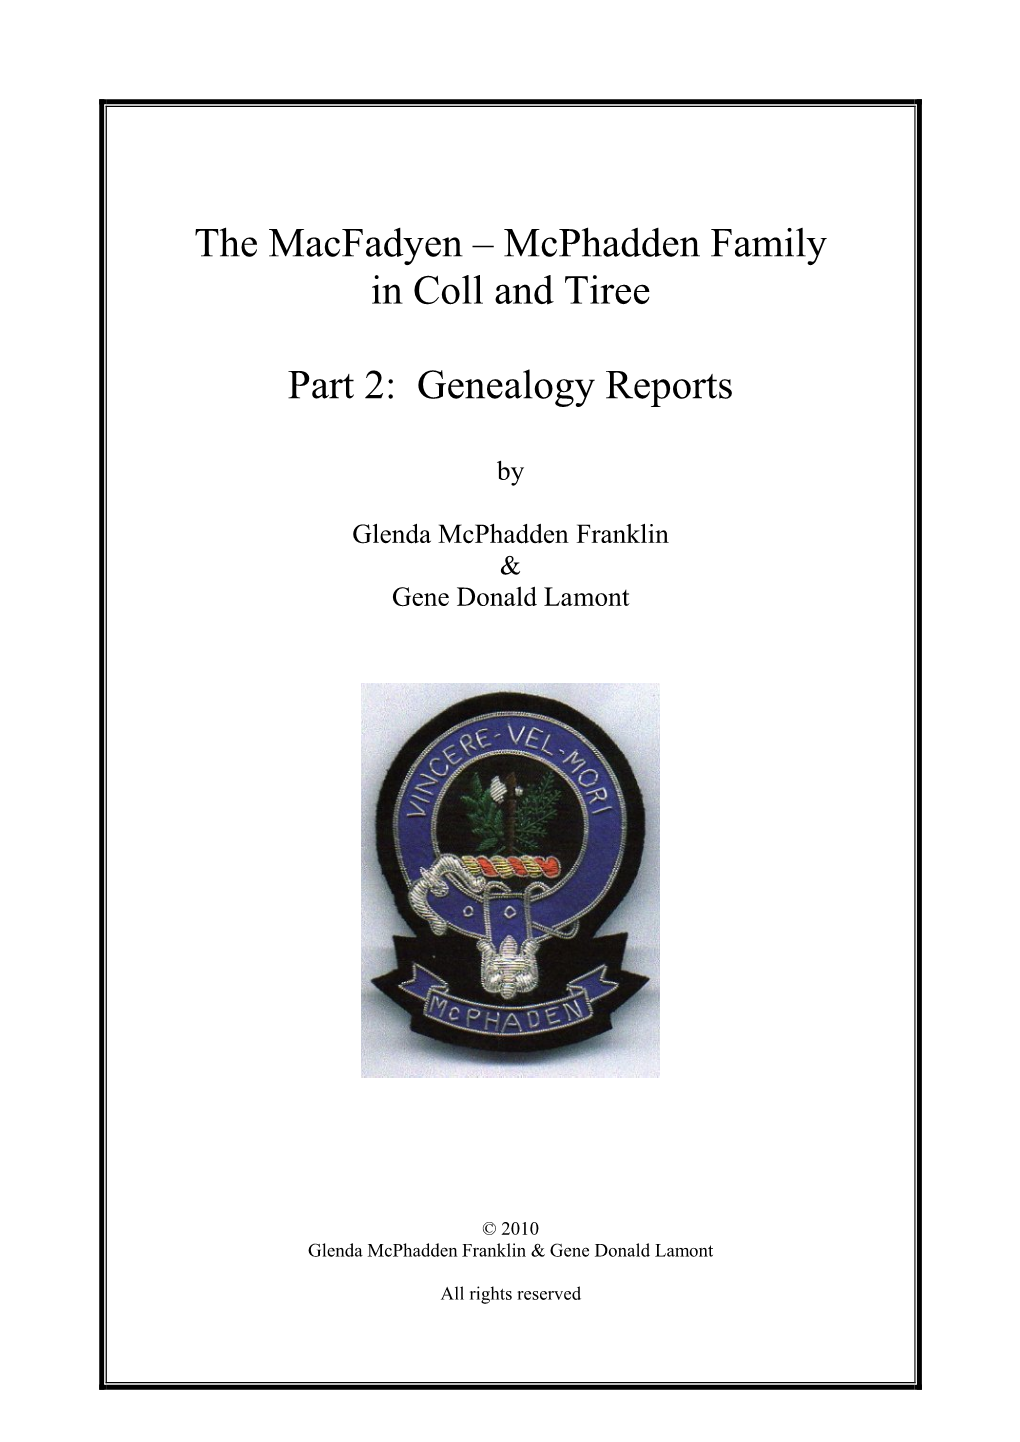 The Macfadyen – Mcphadden Family in Coll and Tiree Part 2: Genealogy